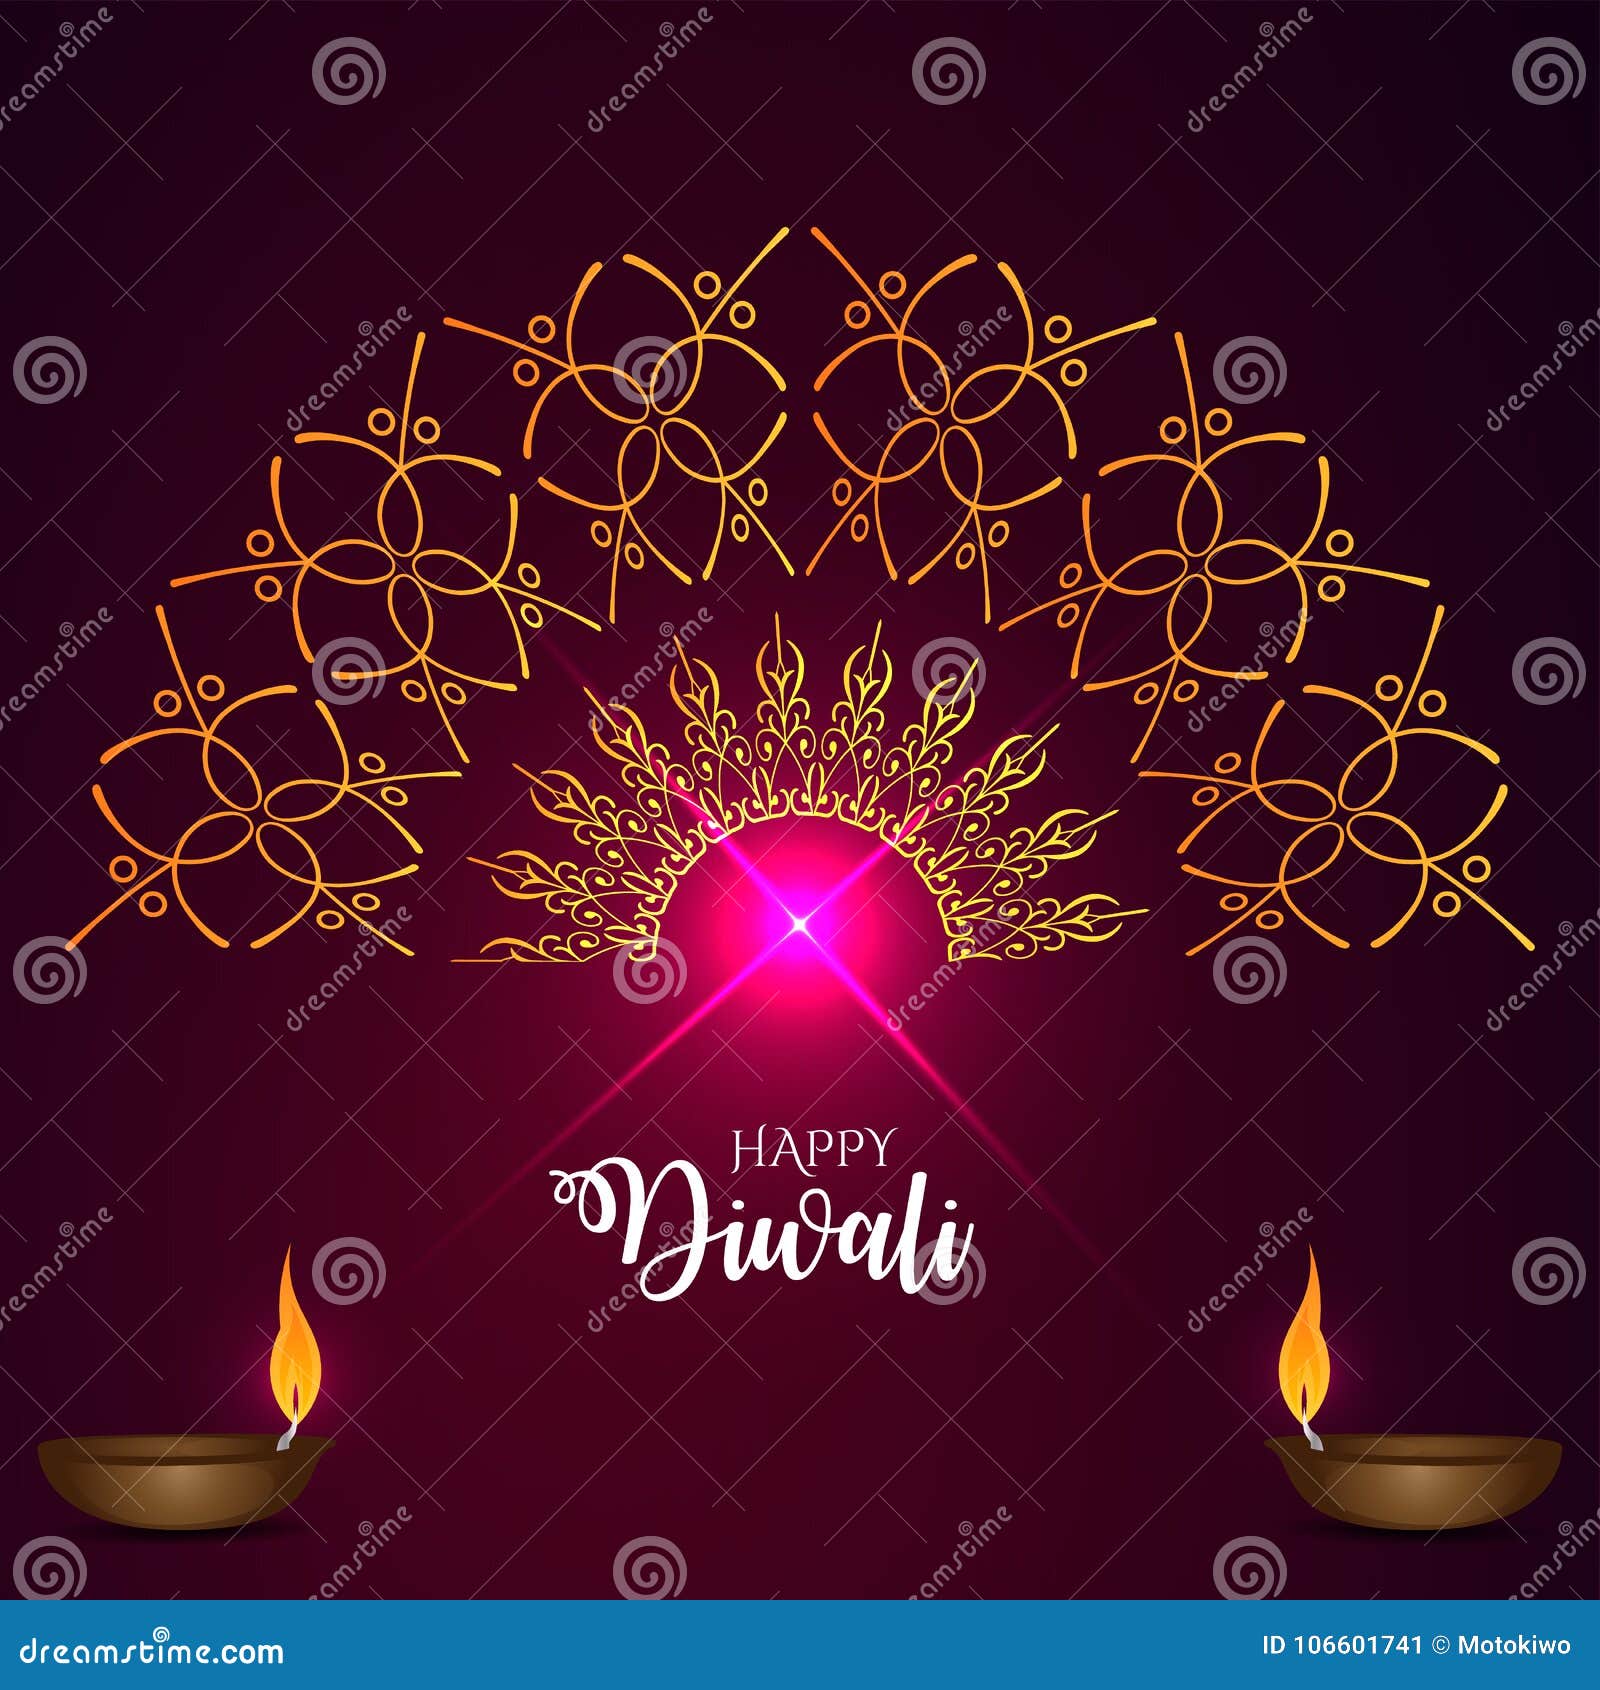 Happy Diwali Greeting Card Background Design Idea. Stock ...